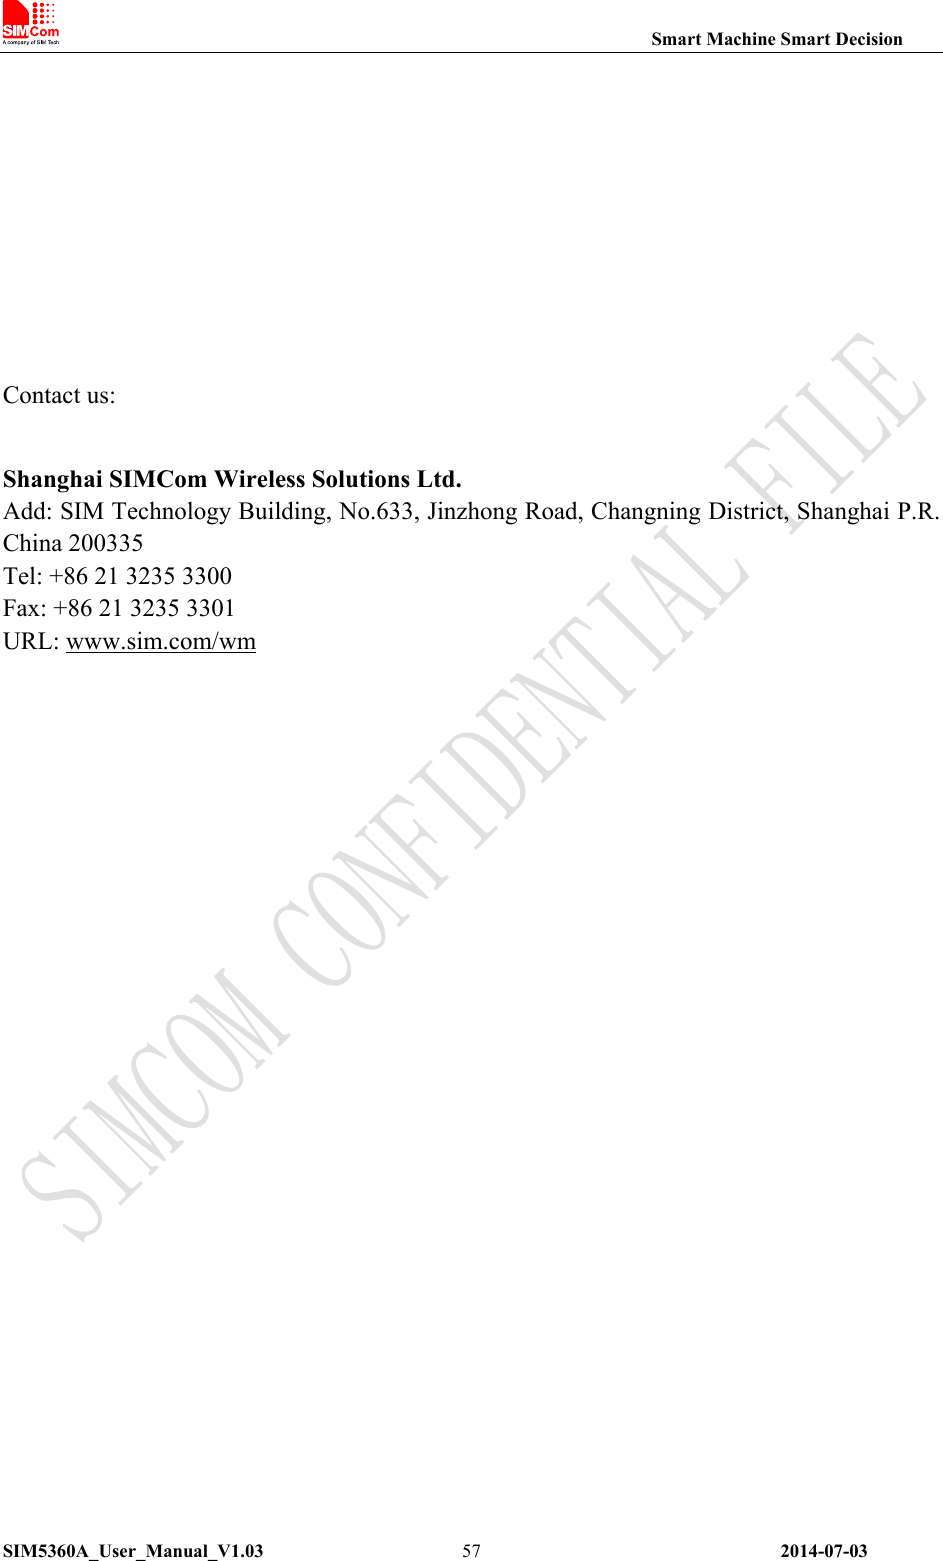                                                                Smart Machine Smart Decision SIM5360A_User_Manual_V1.03                 2014-07-03 57   Contact us: Shanghai SIMCom Wireless Solutions Ltd. Add: SIM Technology Building, No.633, Jinzhong Road, Changning District, Shanghai P.R. China 200335 Tel: +86 21 3235 3300 Fax: +86 21 3235 3301 URL: www.sim.com/wm   